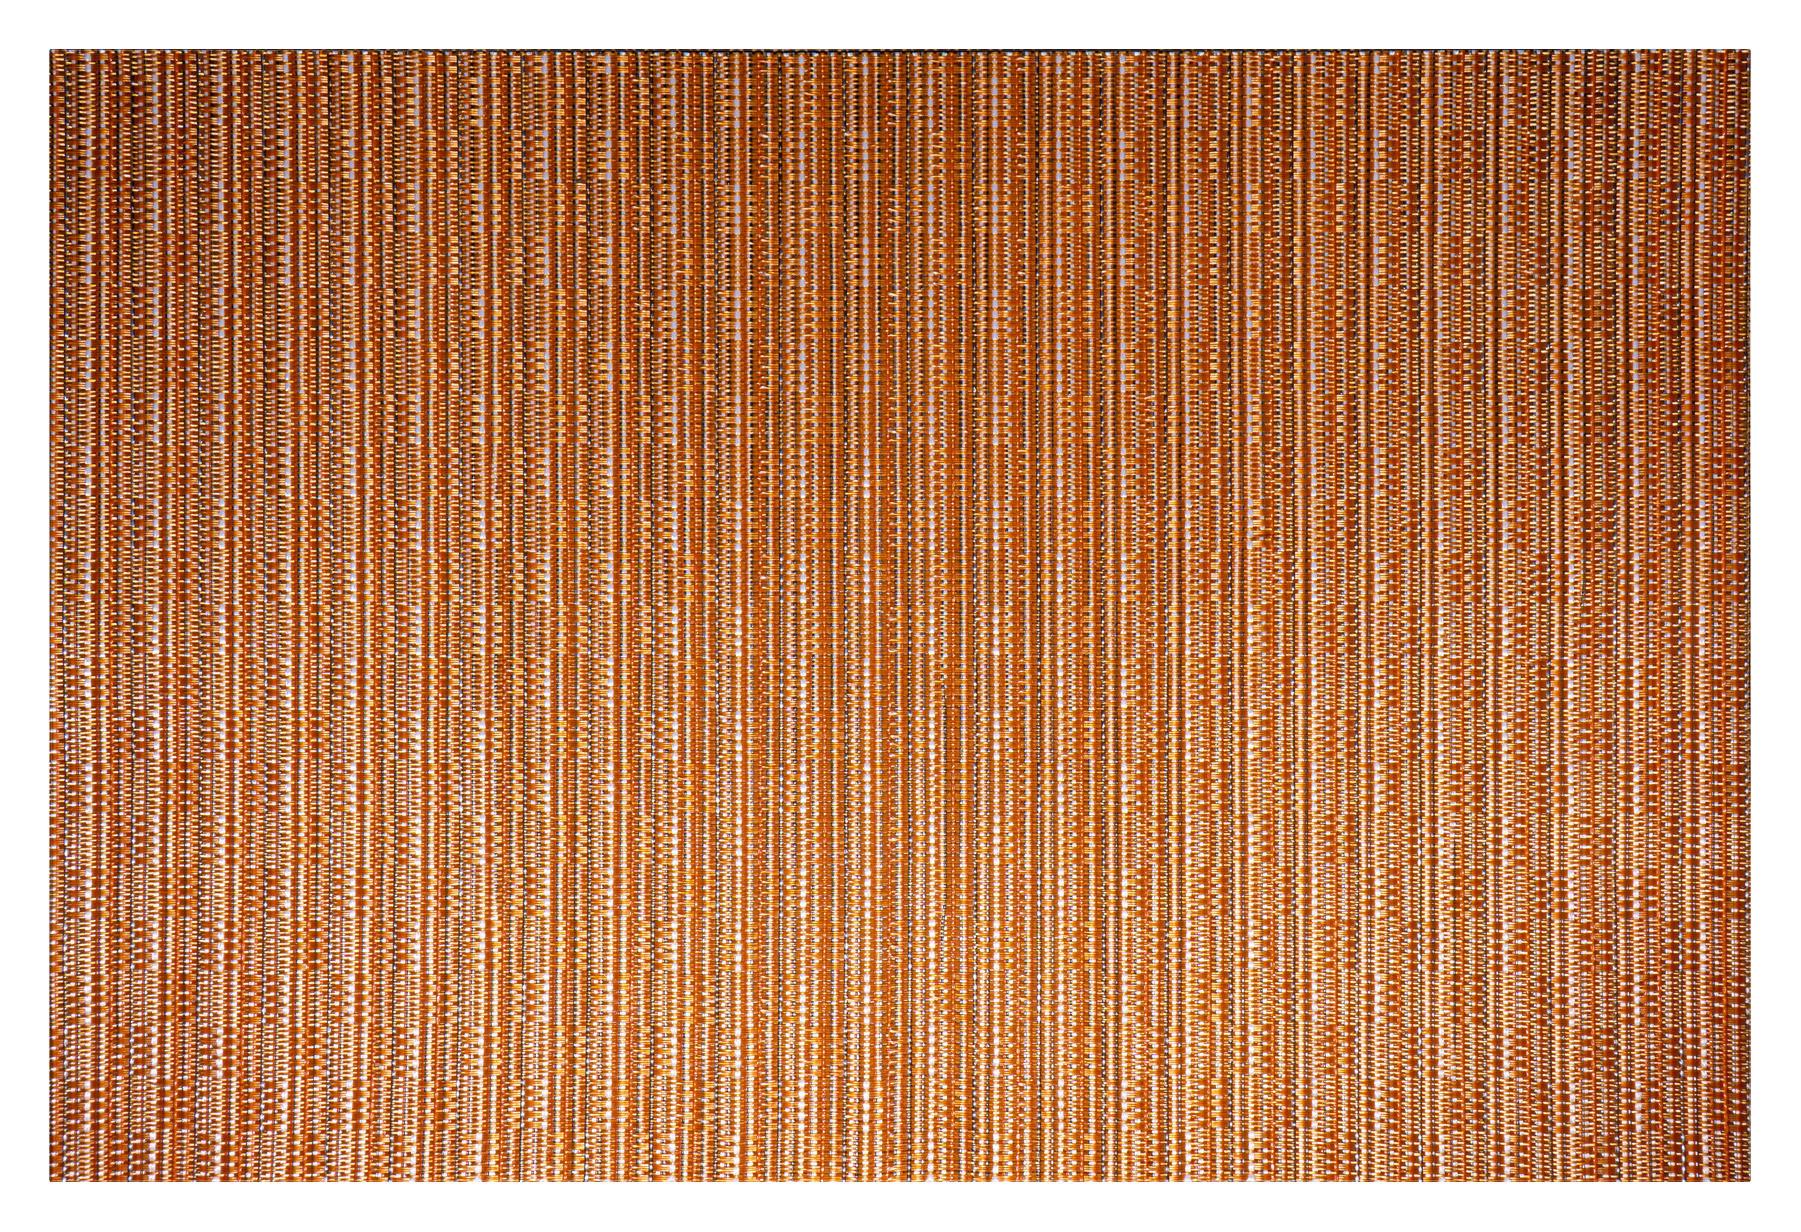 Tischset Sonja Terra Aus Kunststoff, 30x45 cm - Terra cotta, MODERN, Kunststoff (30/45cm) - Luca Bessoni